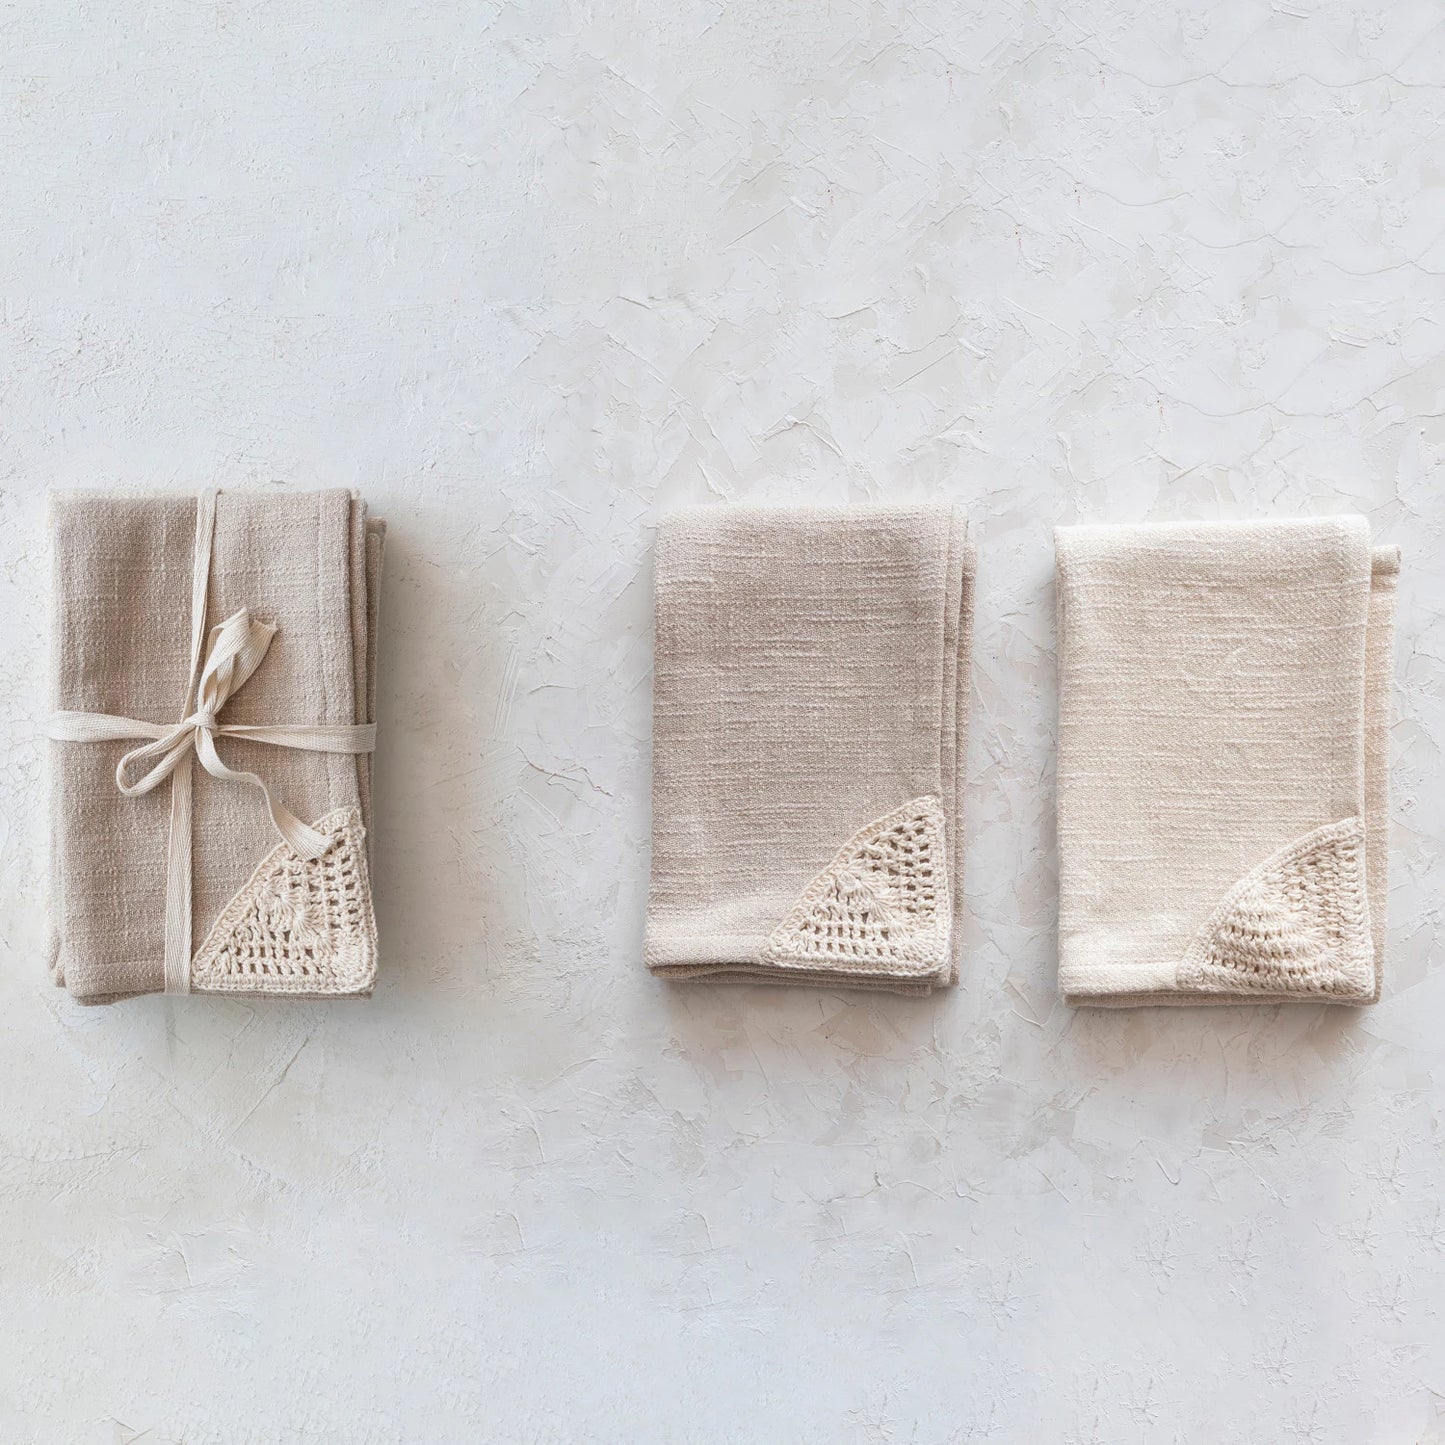 Woven Cotton Tea Towels with Crochet Corner - Natural + Beige - Set of 2